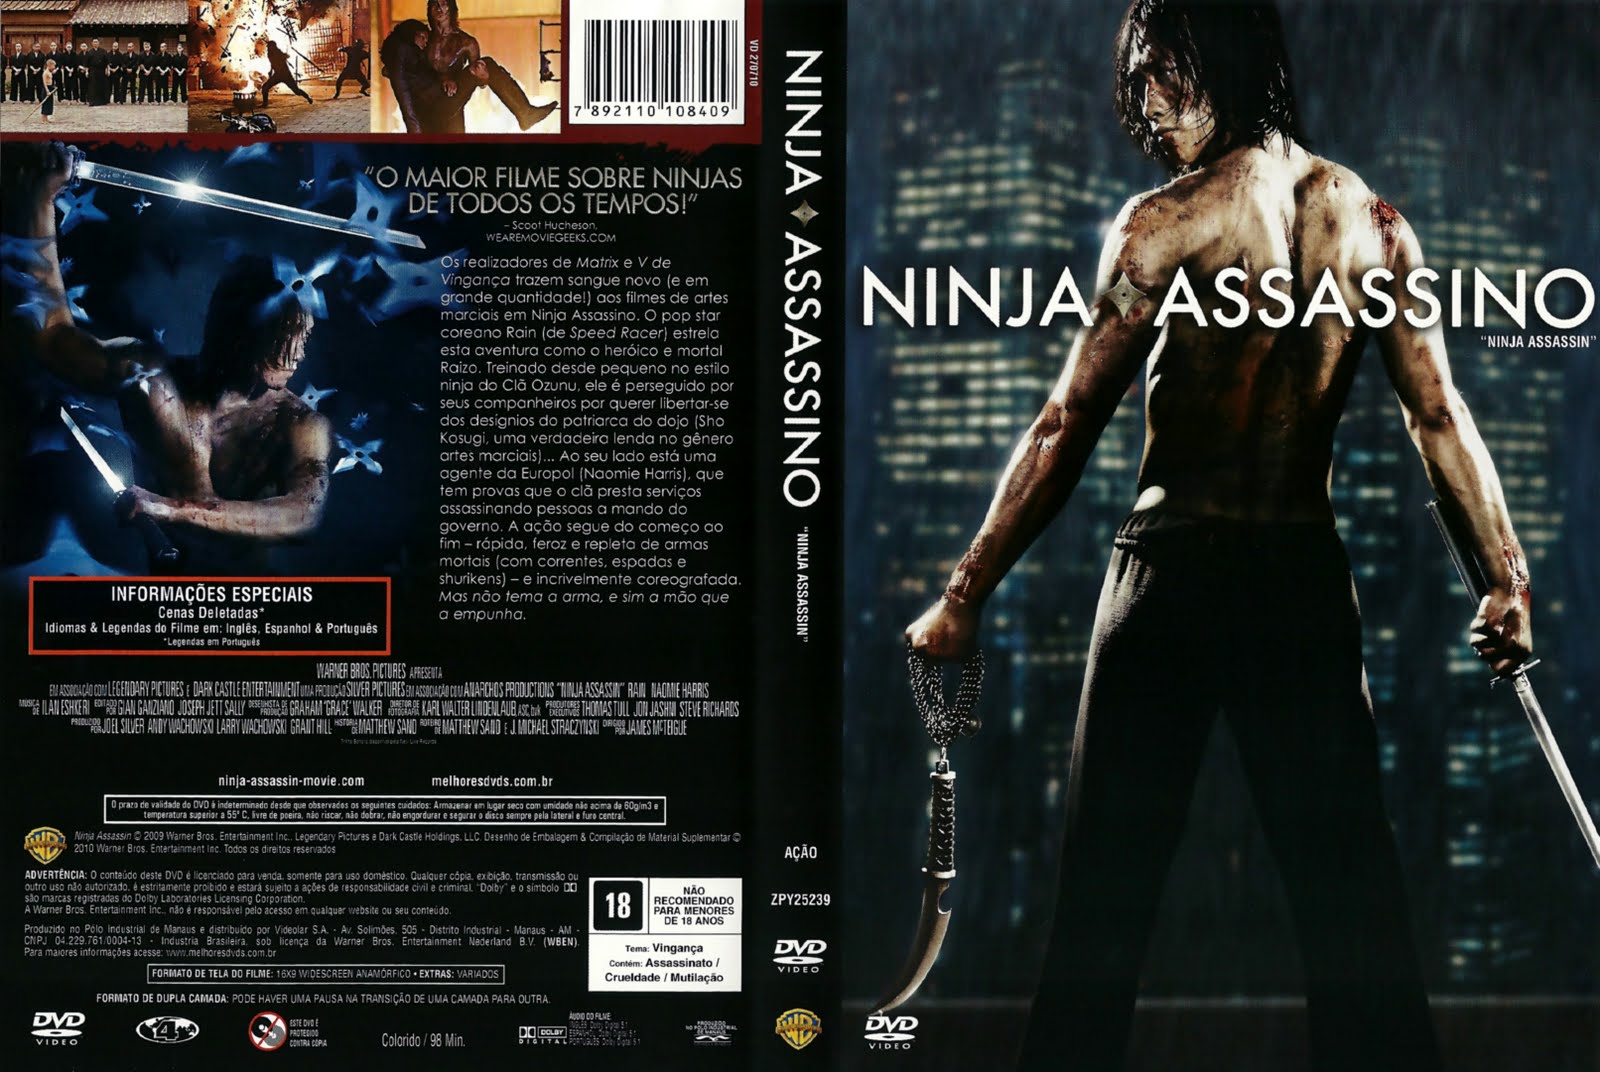 Ninja Assassino : Os filmes similares - AdoroCinema